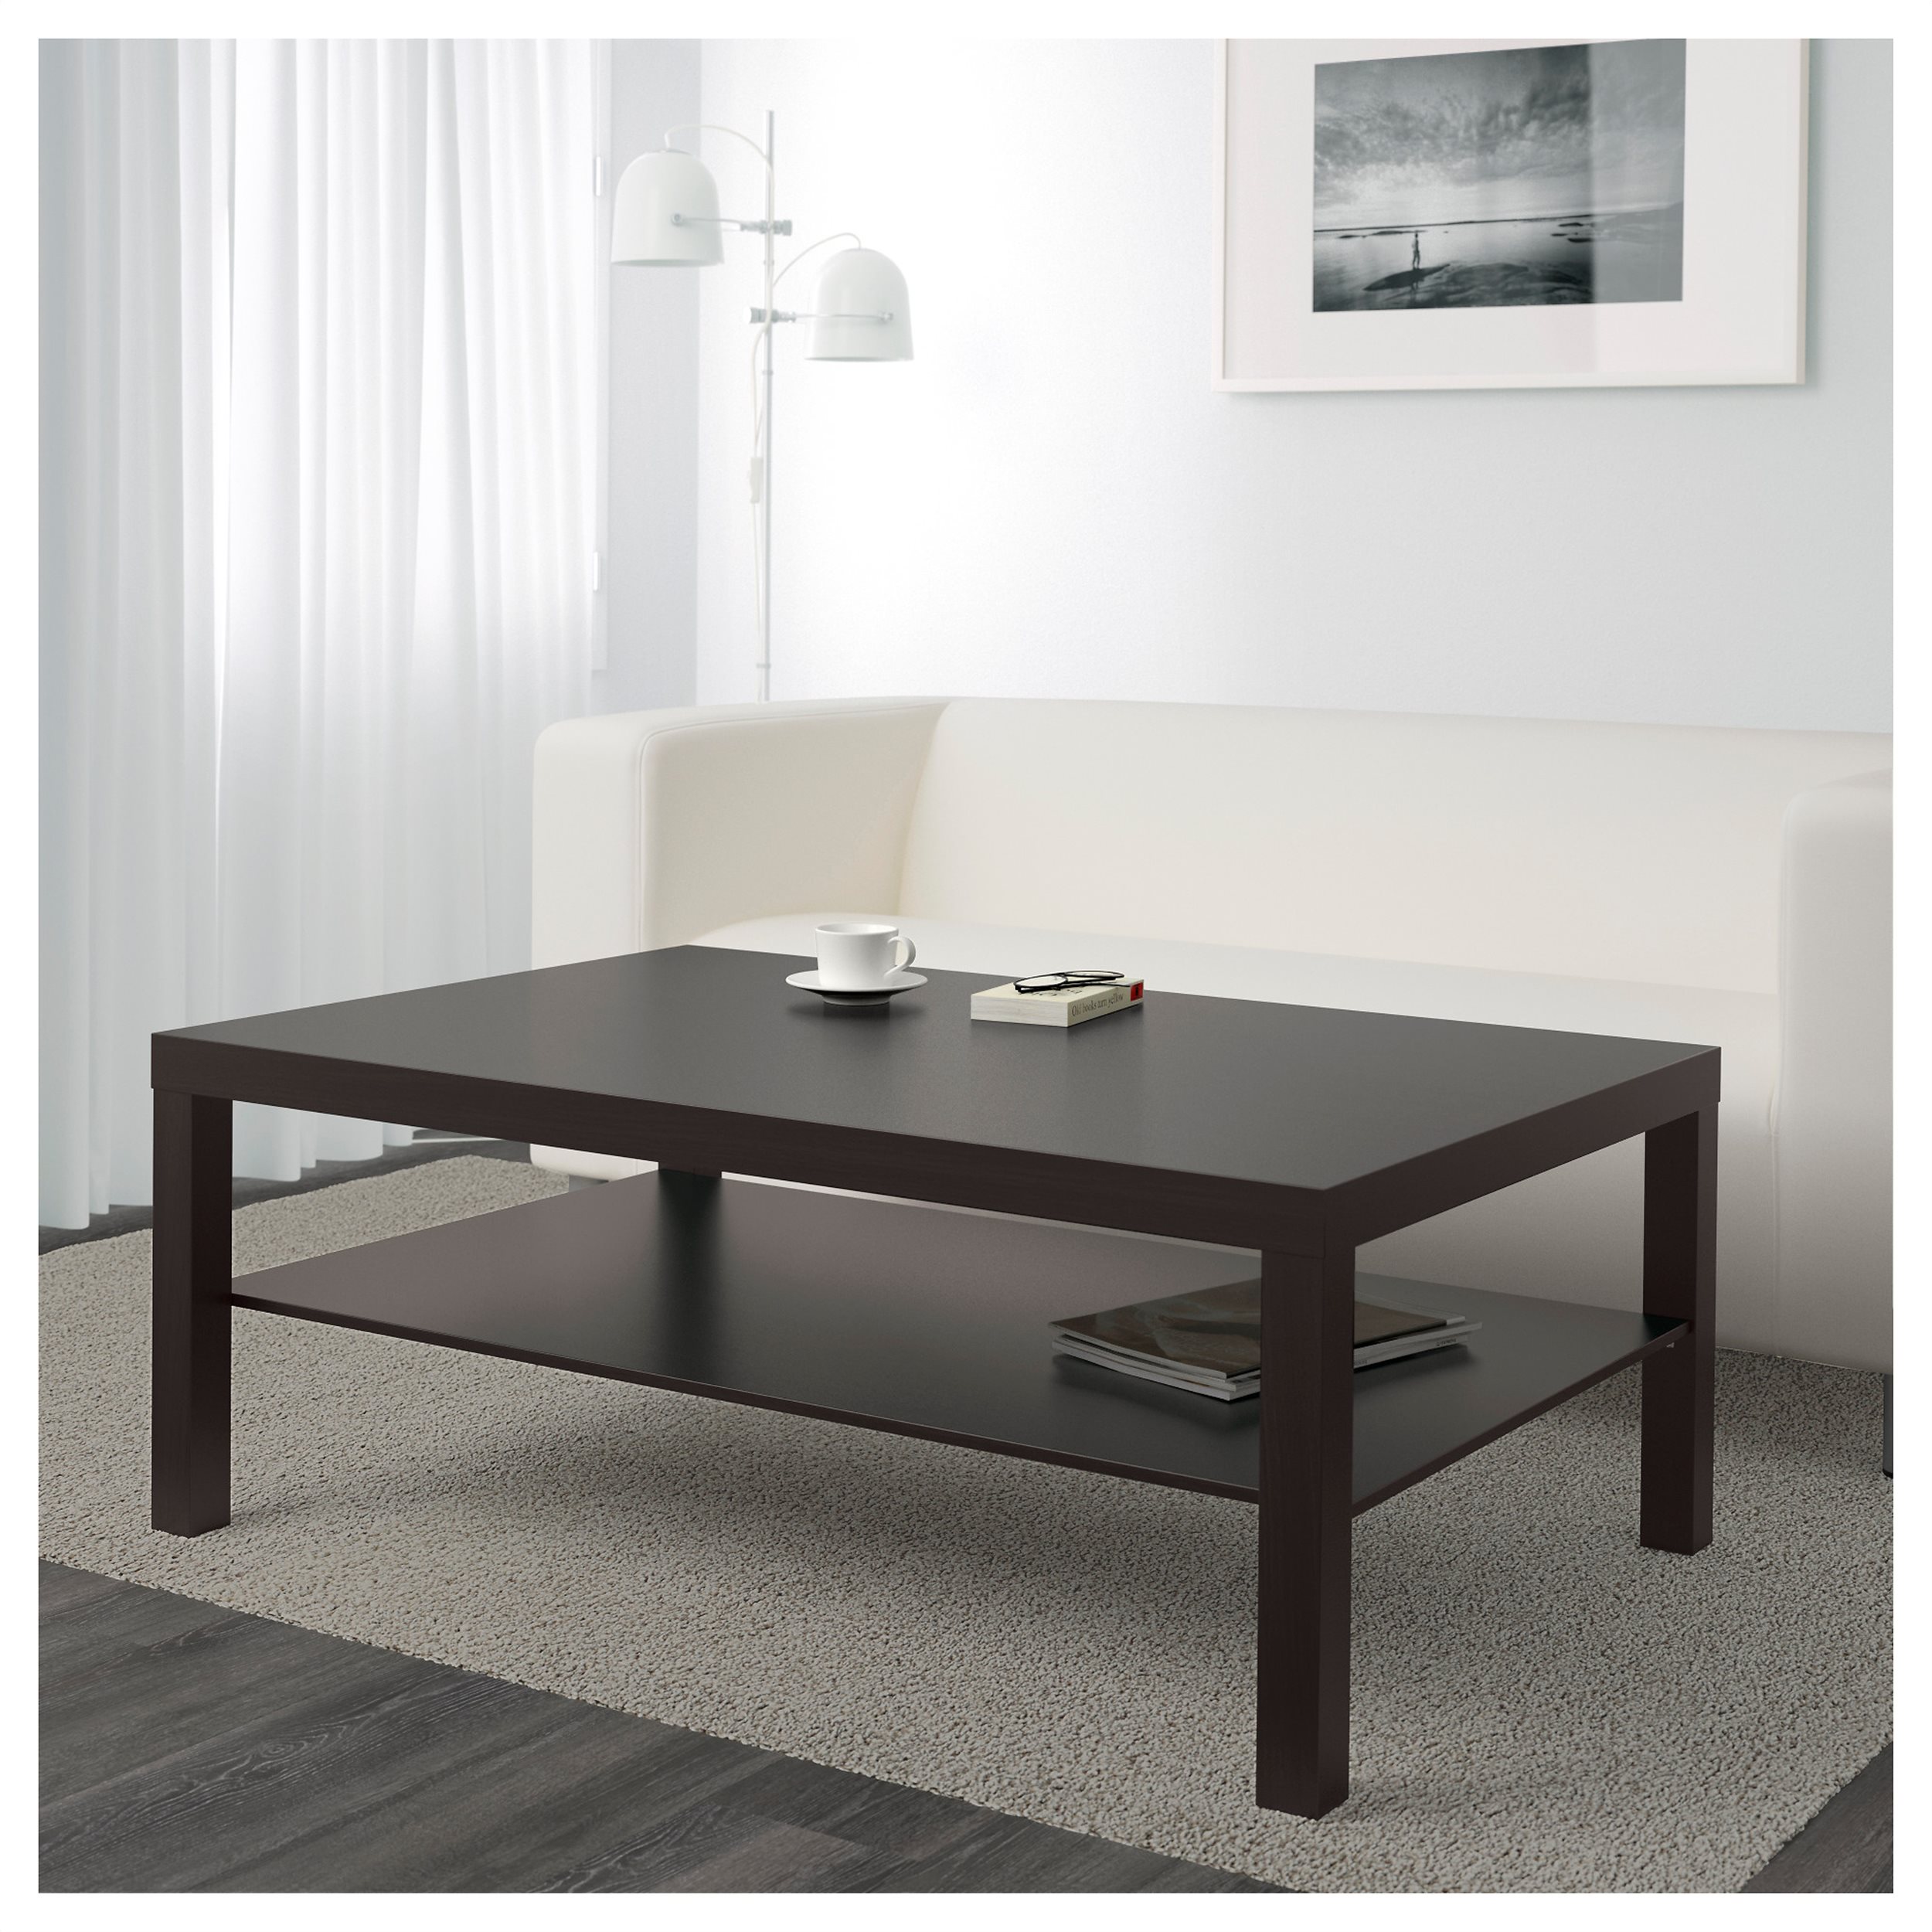 LACK coffee table | IKEA Cyprus